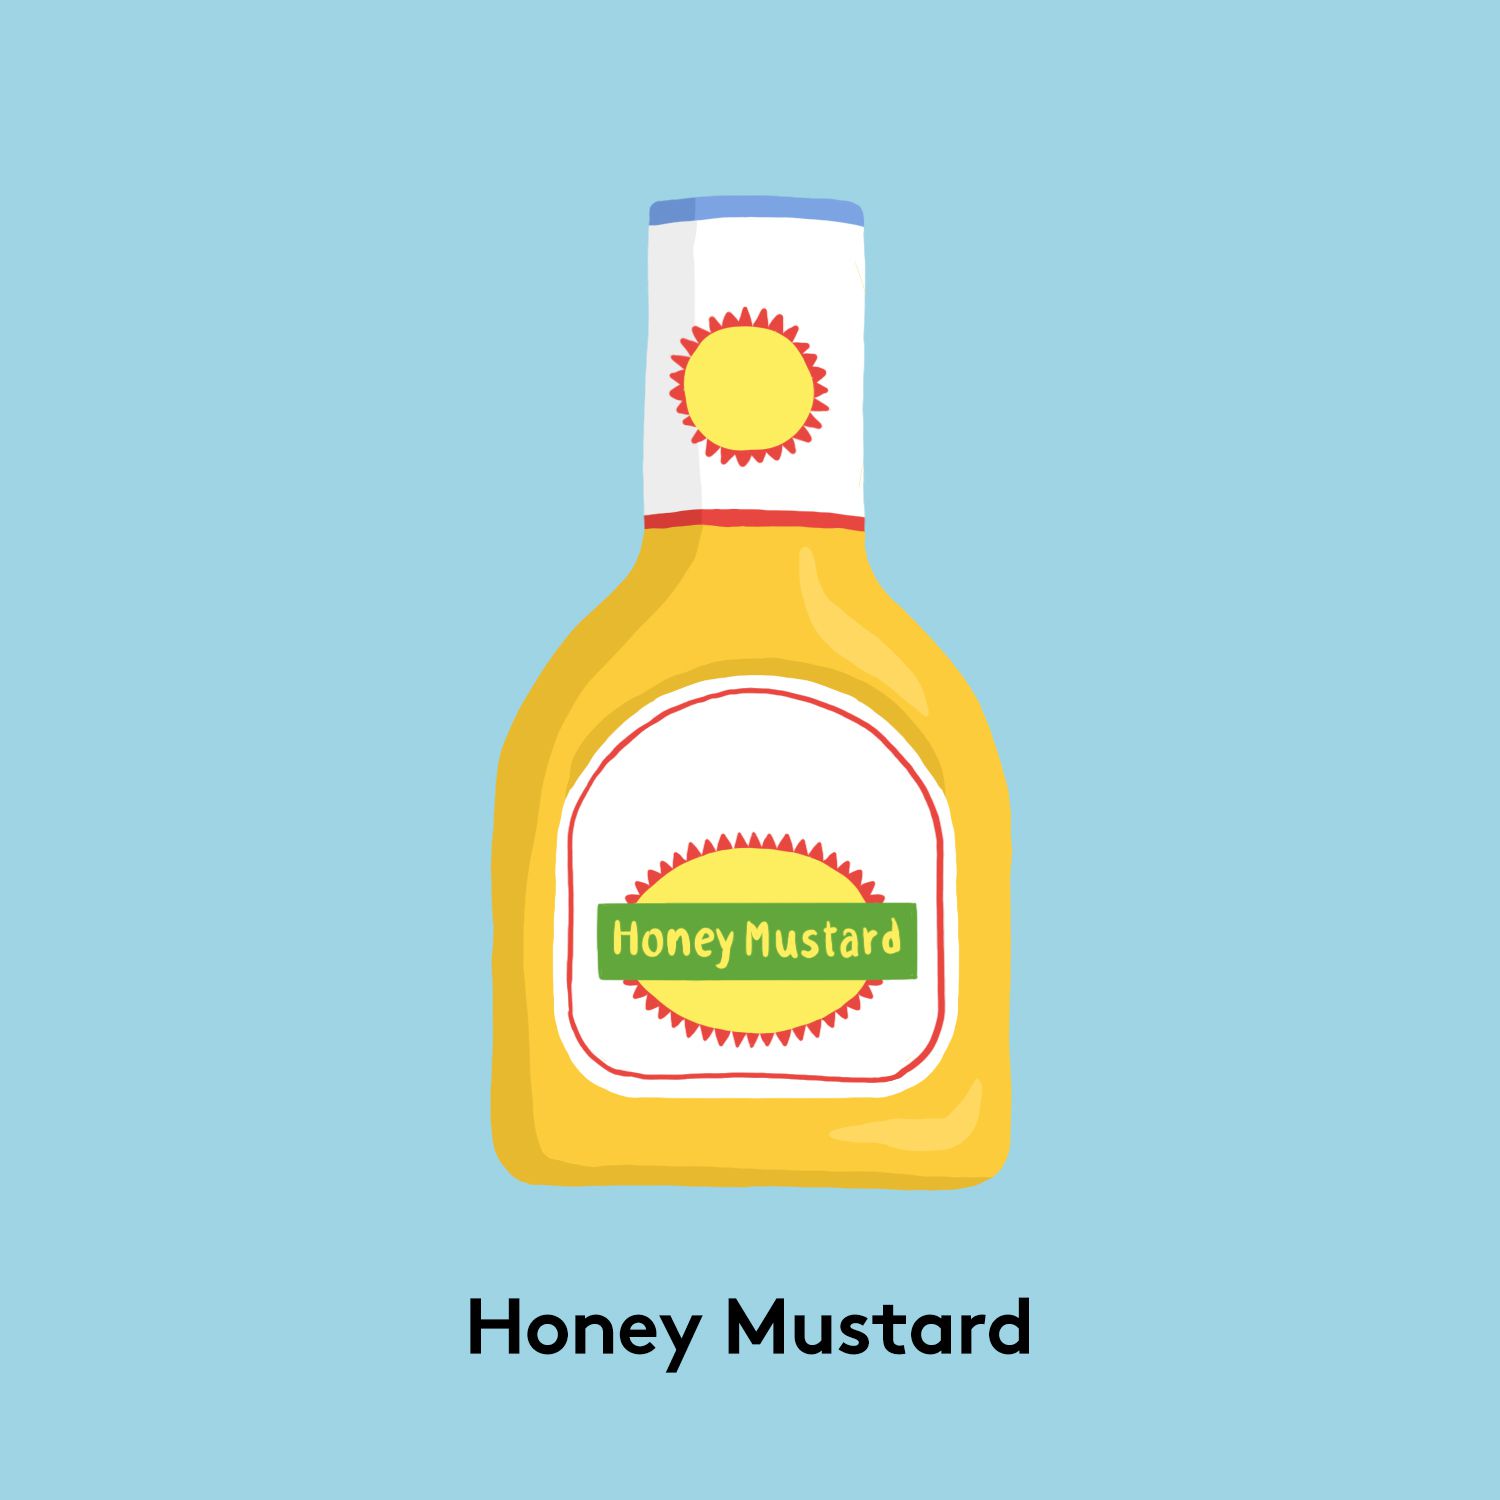 Types of mustard - Honey mustard picture